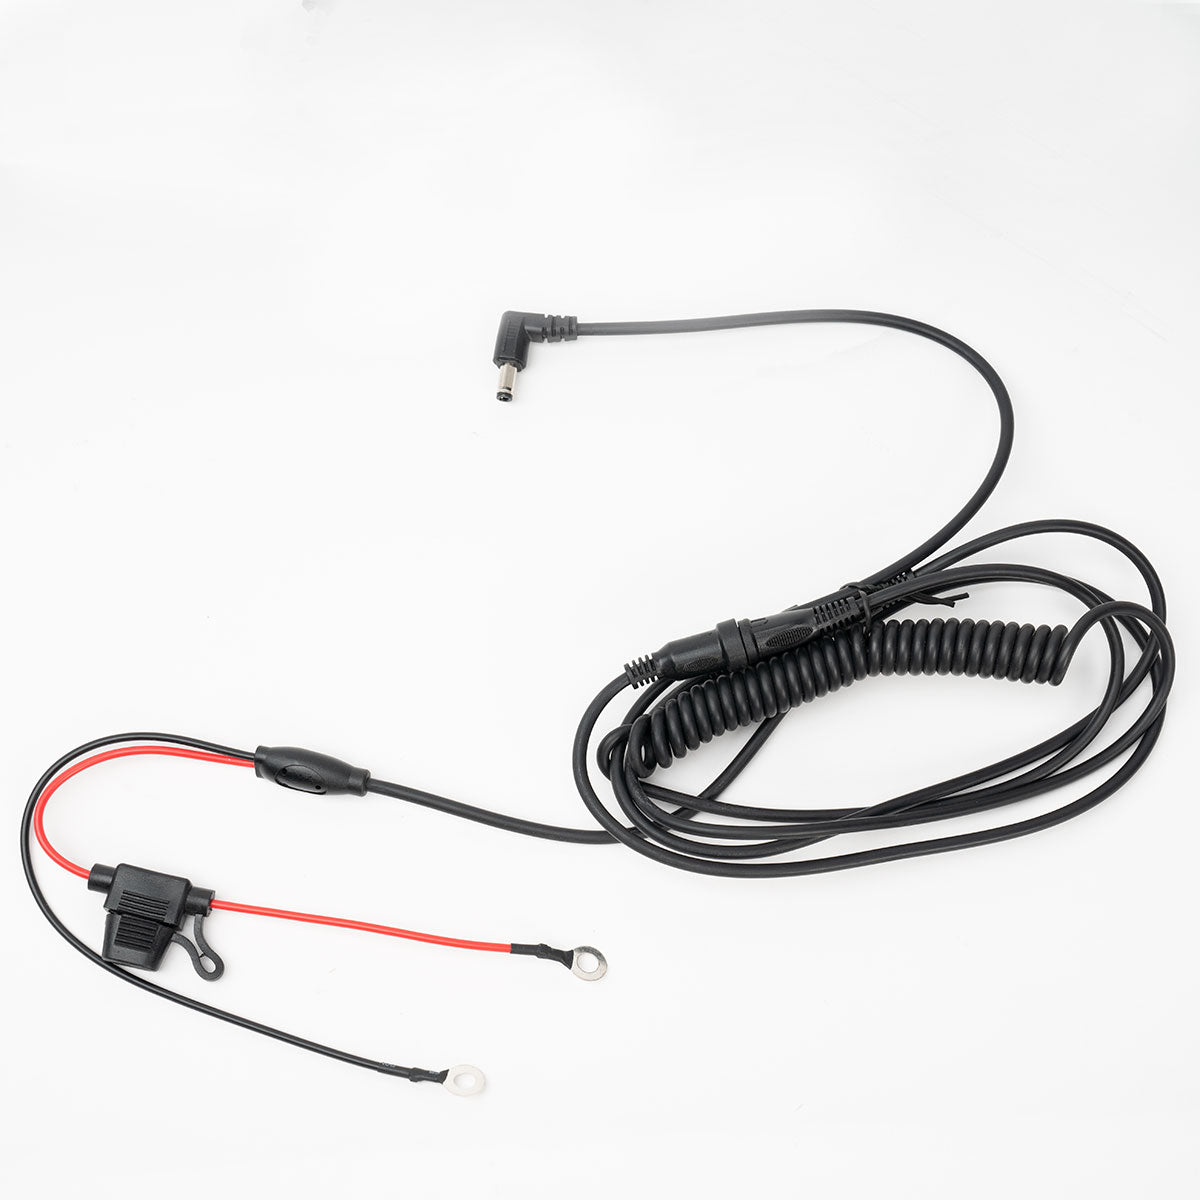 12V Power Cable Kit for Delta V and Mach V Helmets